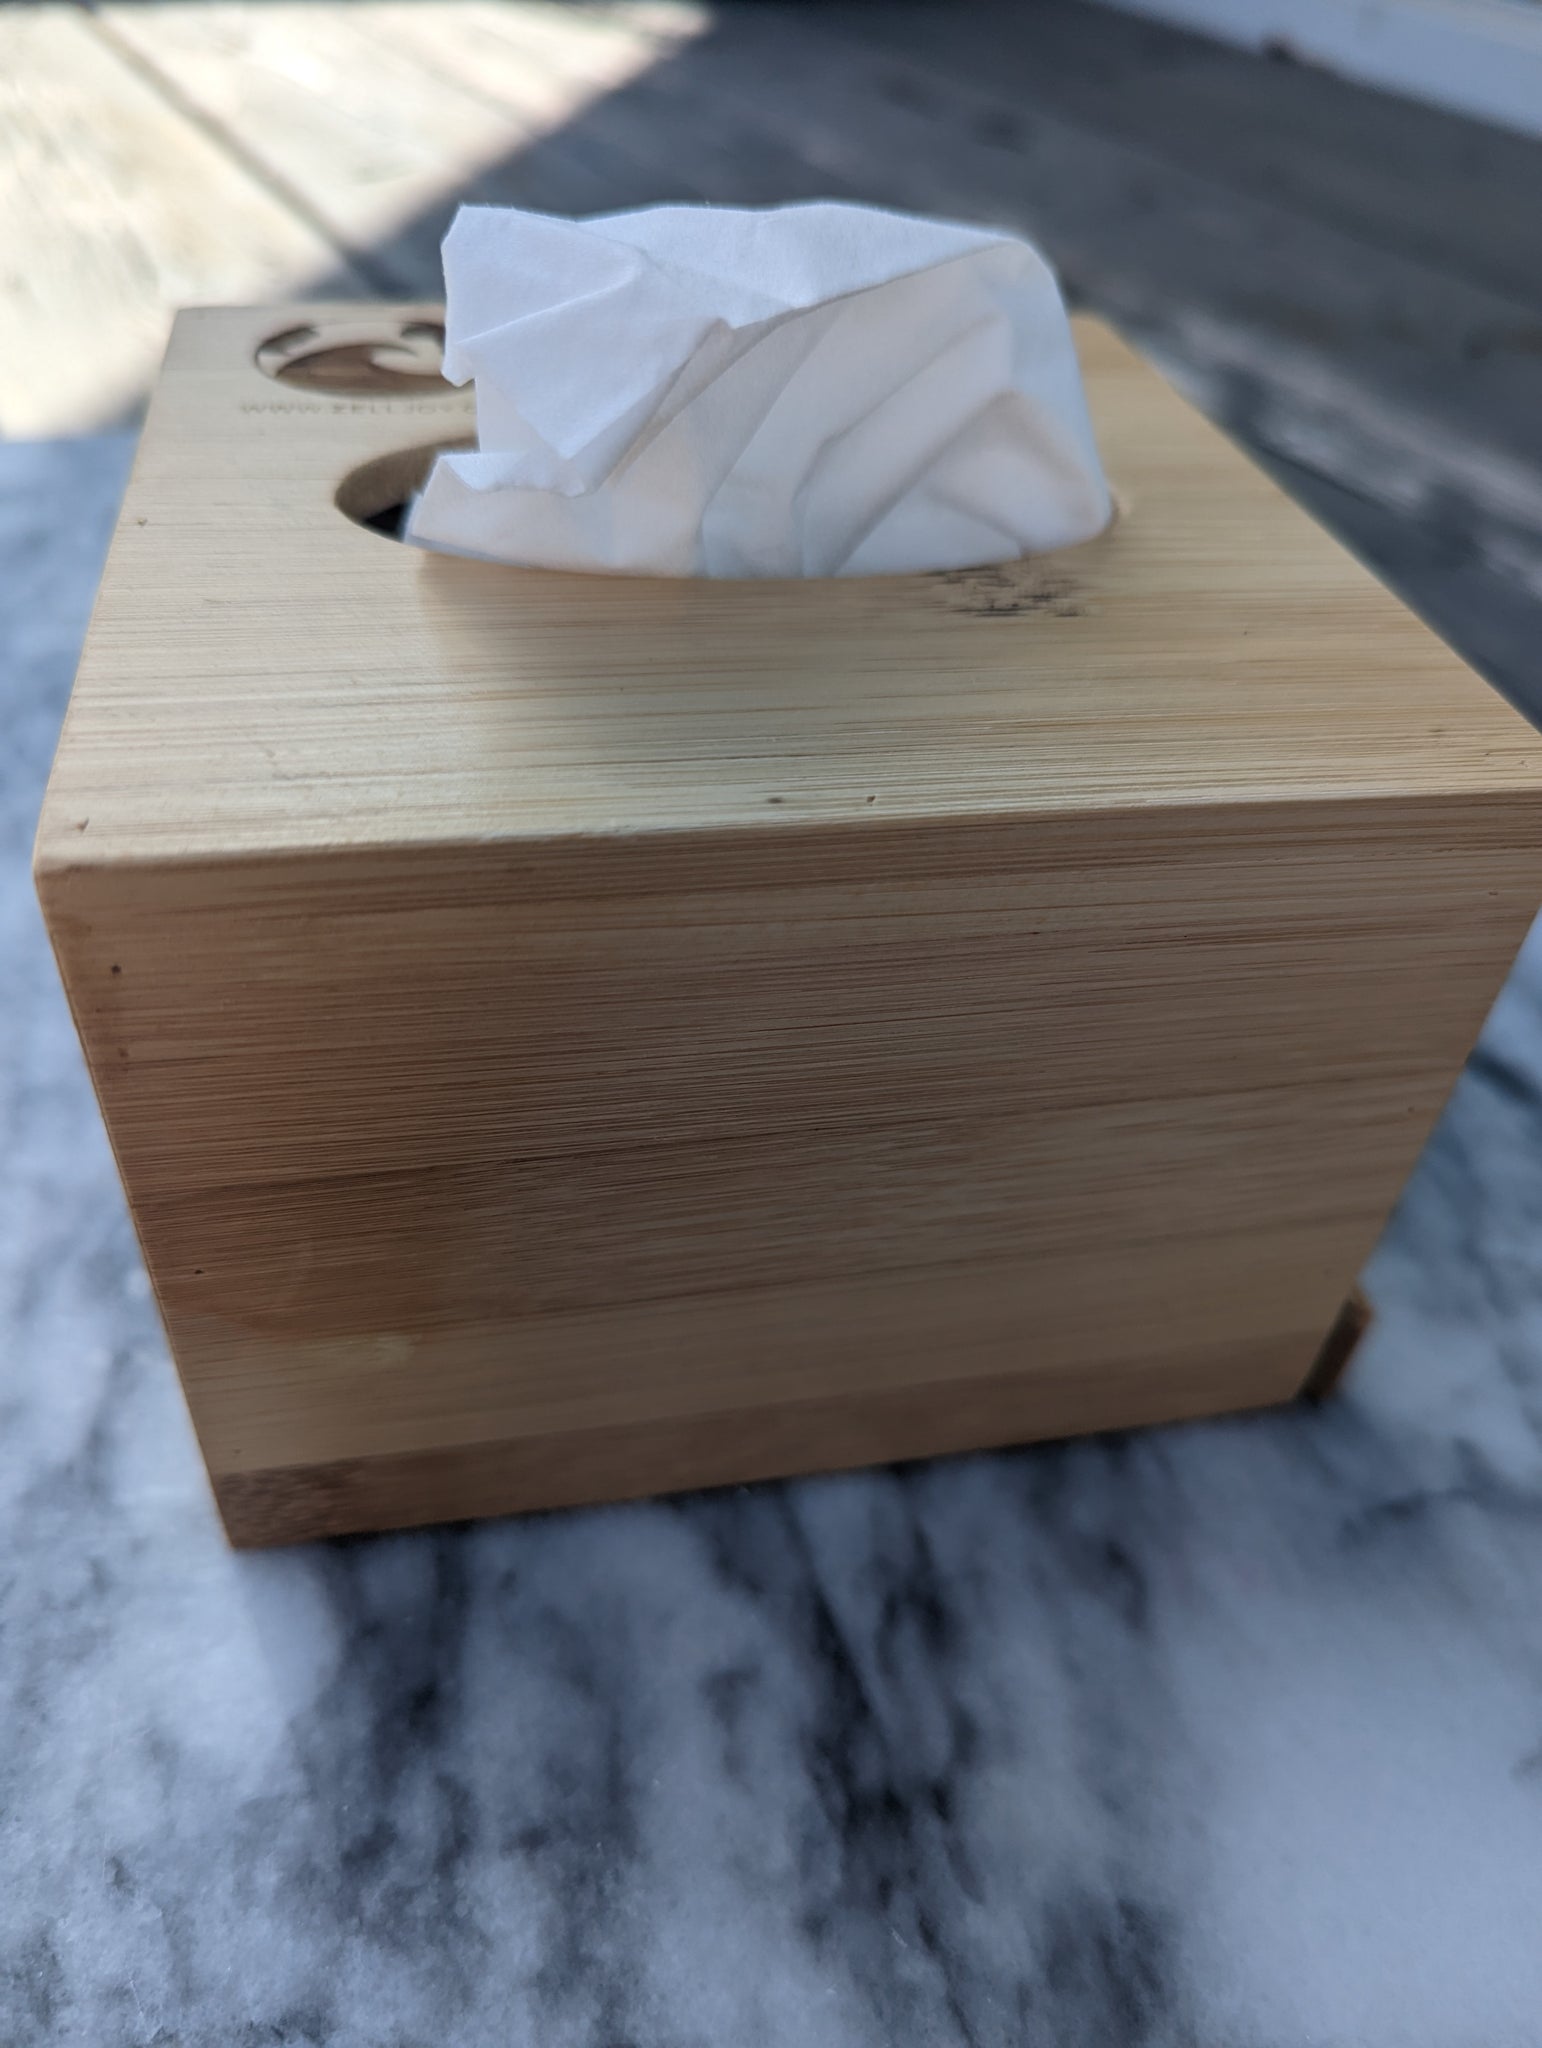 Bamboo Tissue Box Holder